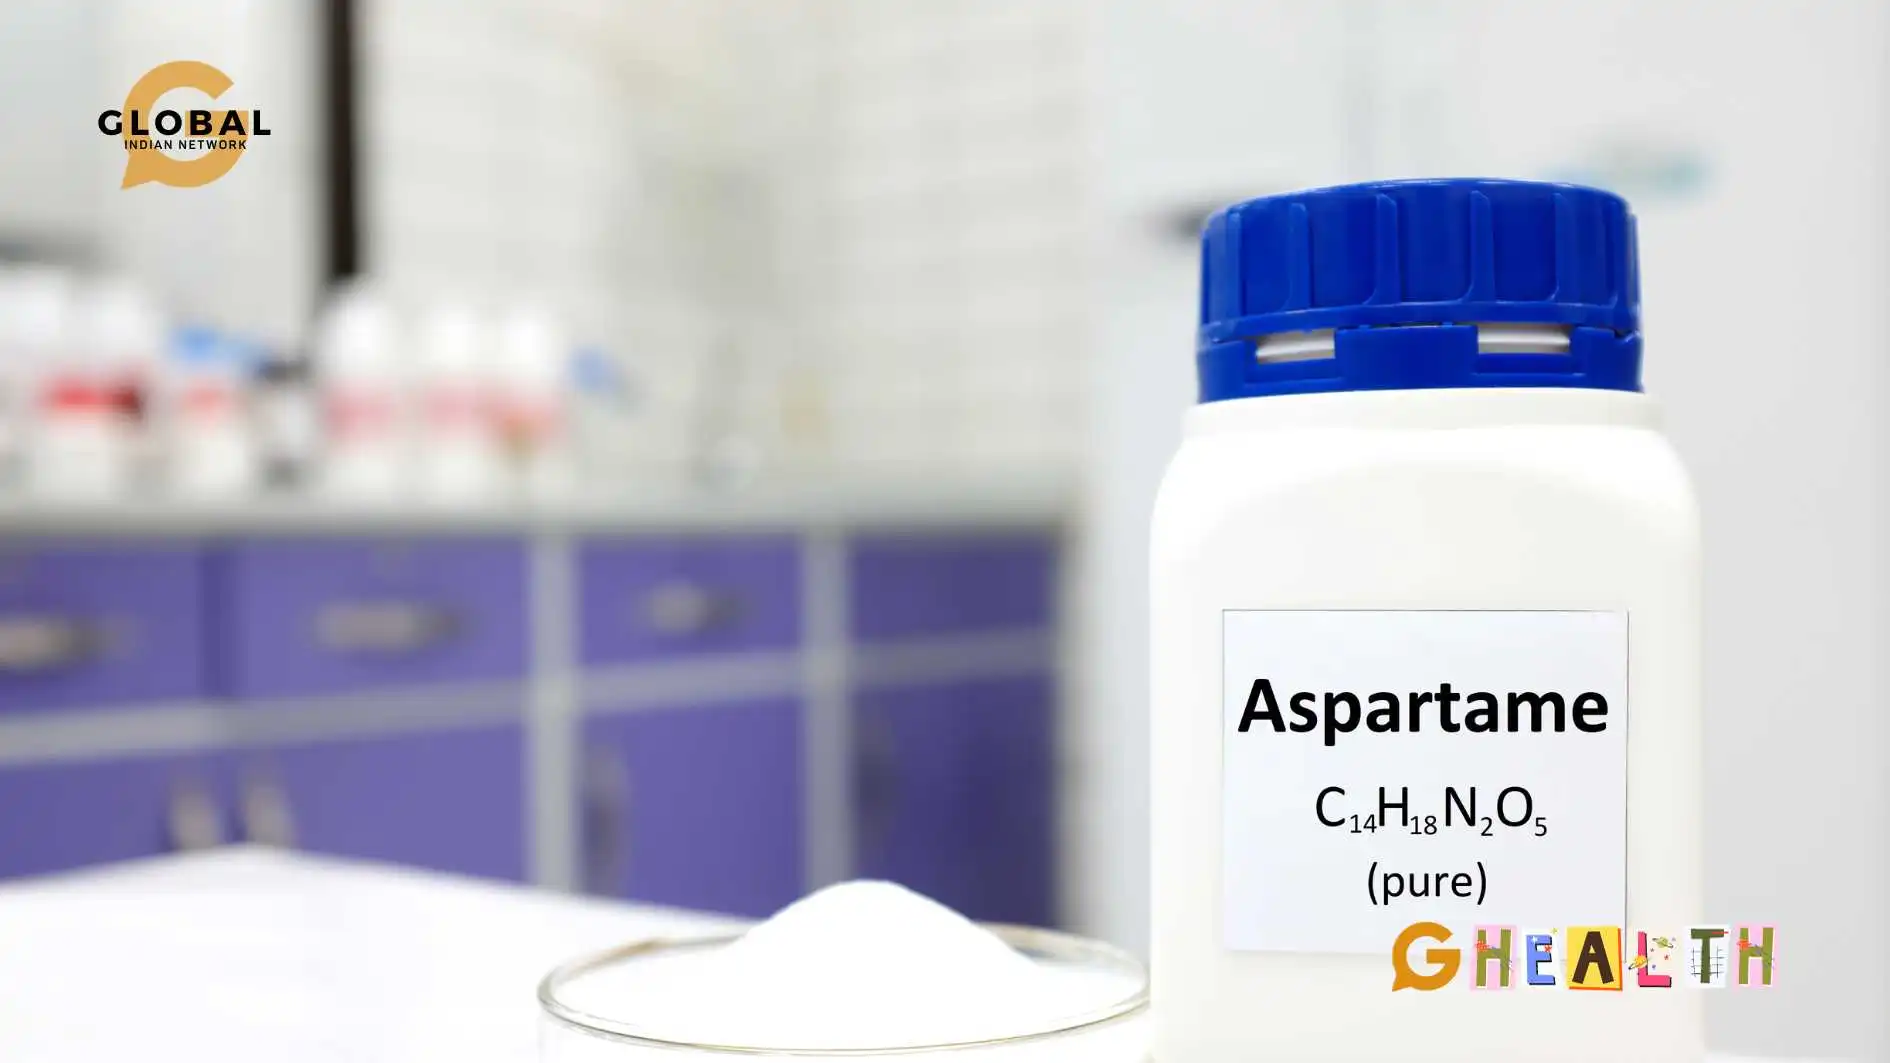 artificial sweetener aspartame